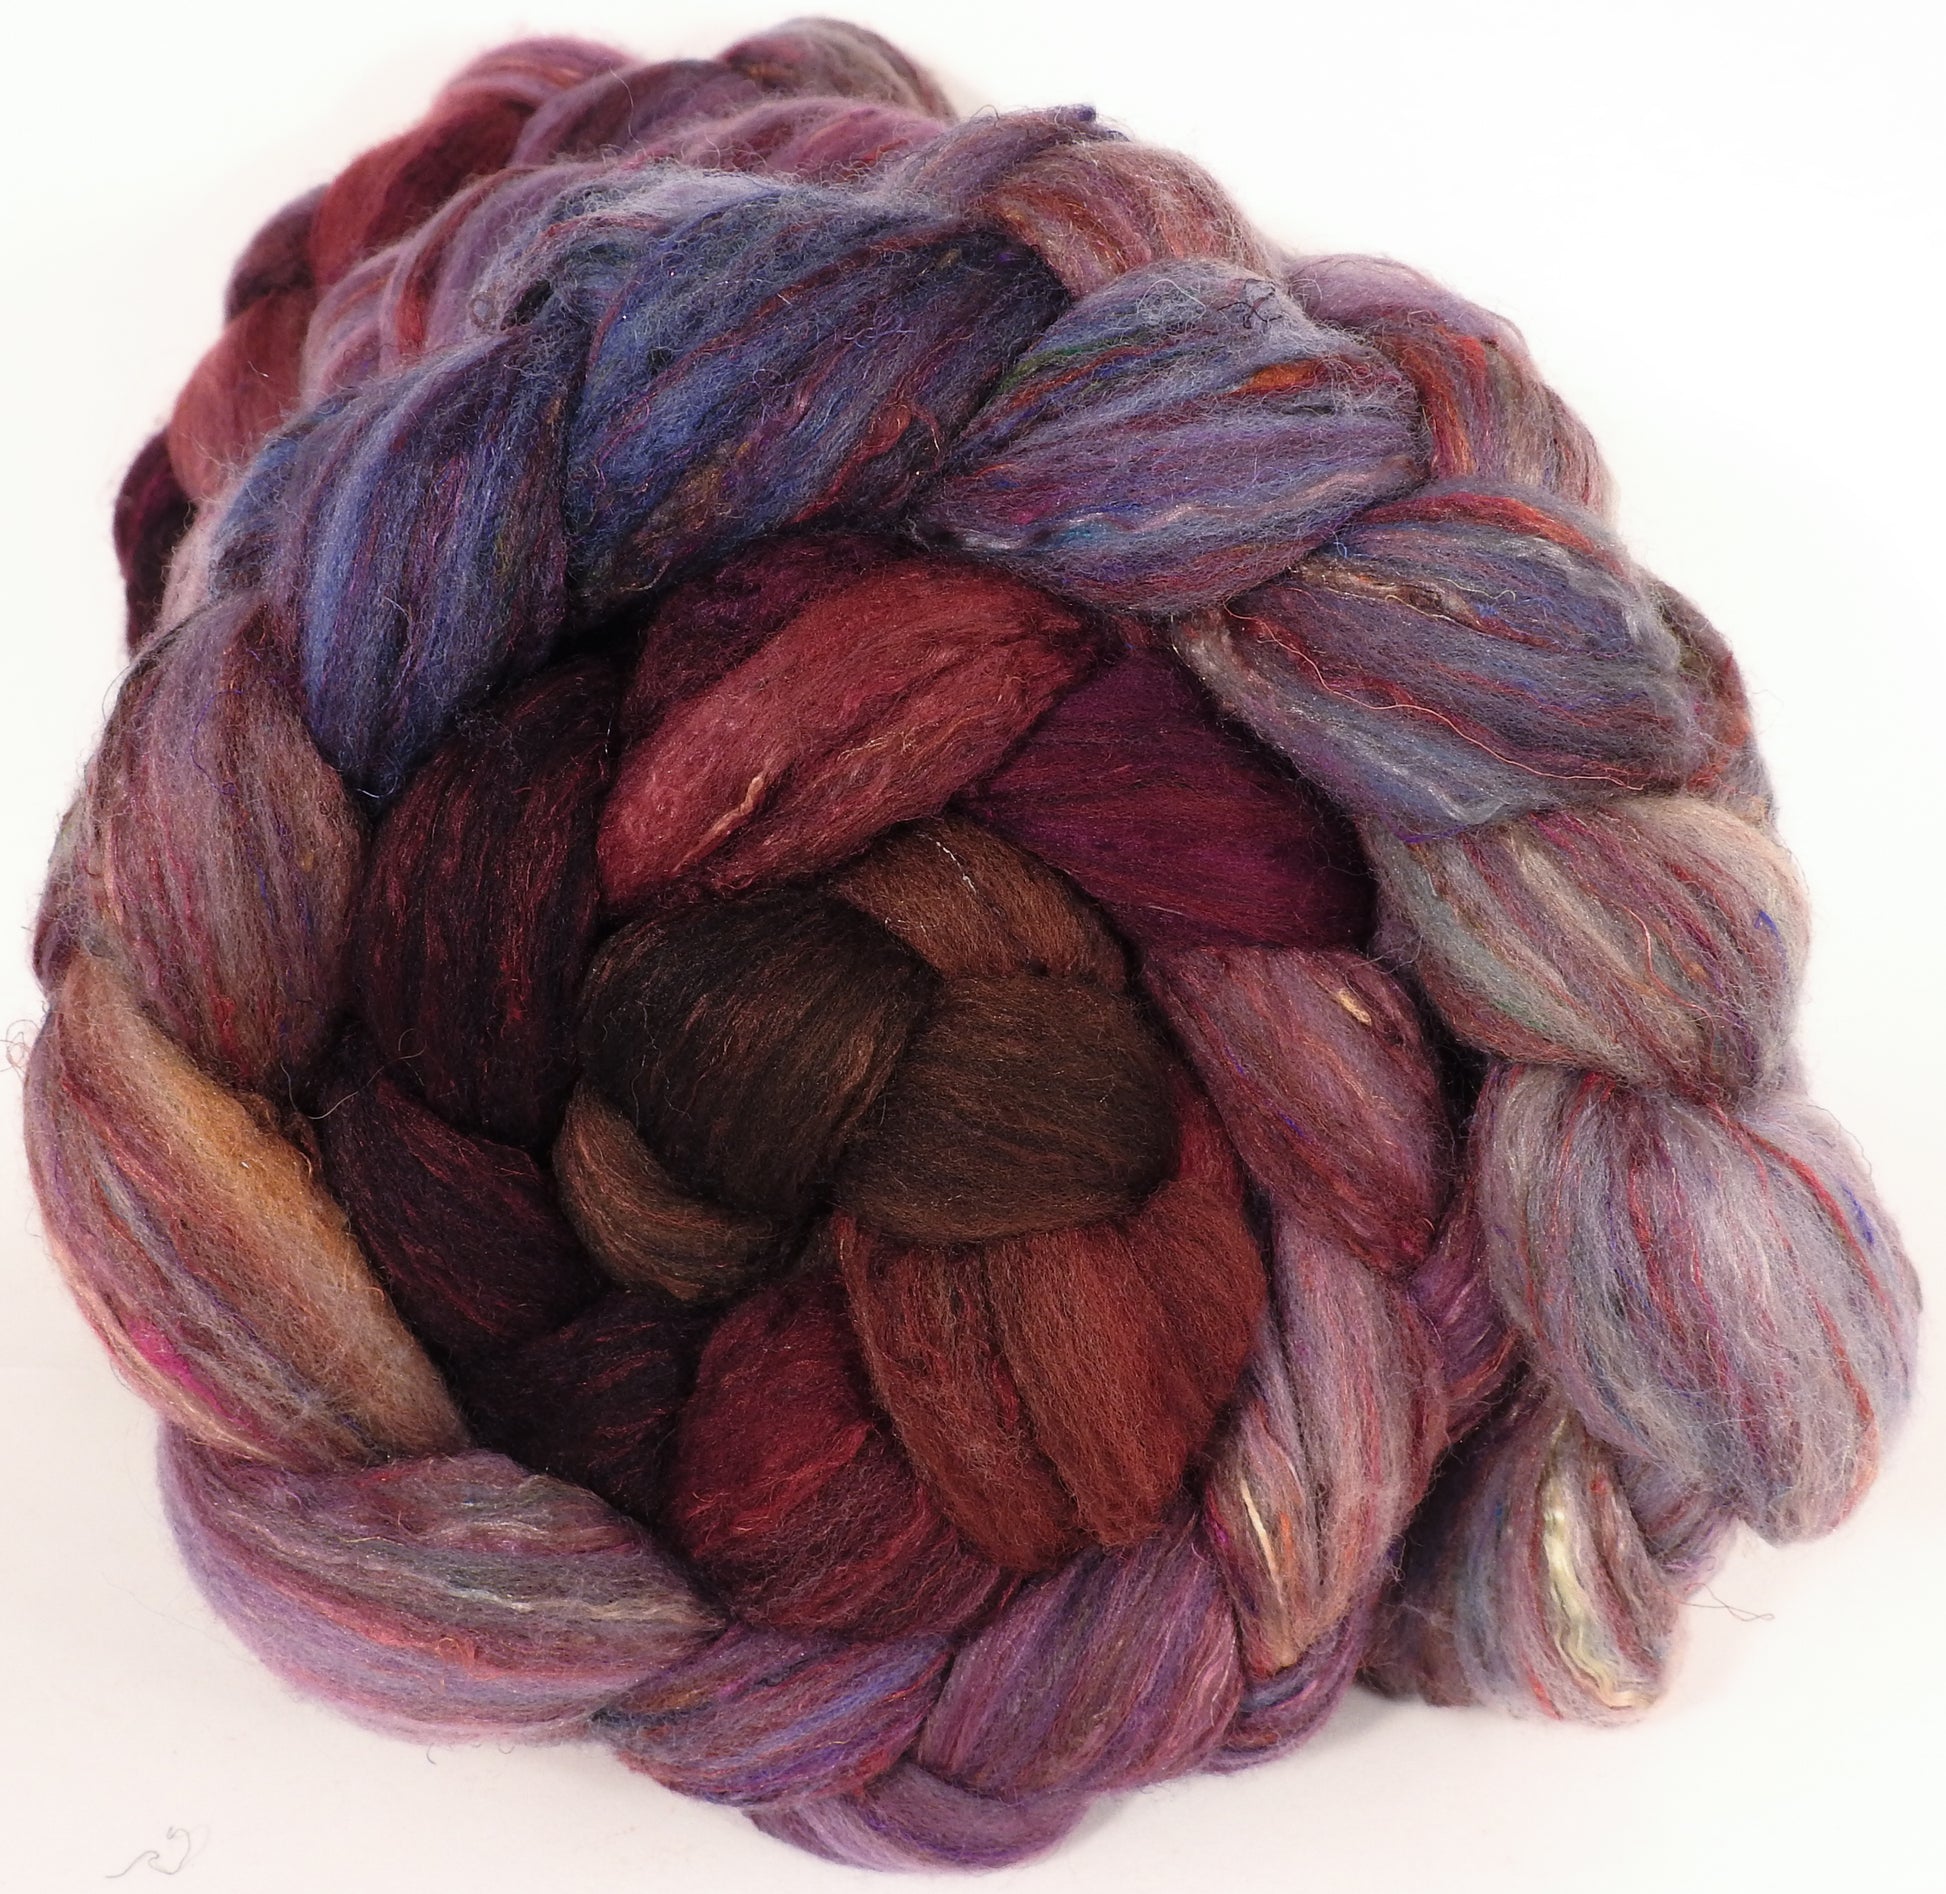 Batt in a Braid #39- Provence - Falkland Merino/ Mulberry Silk / Sari Silk (50/25/25) - Inglenook Fibers